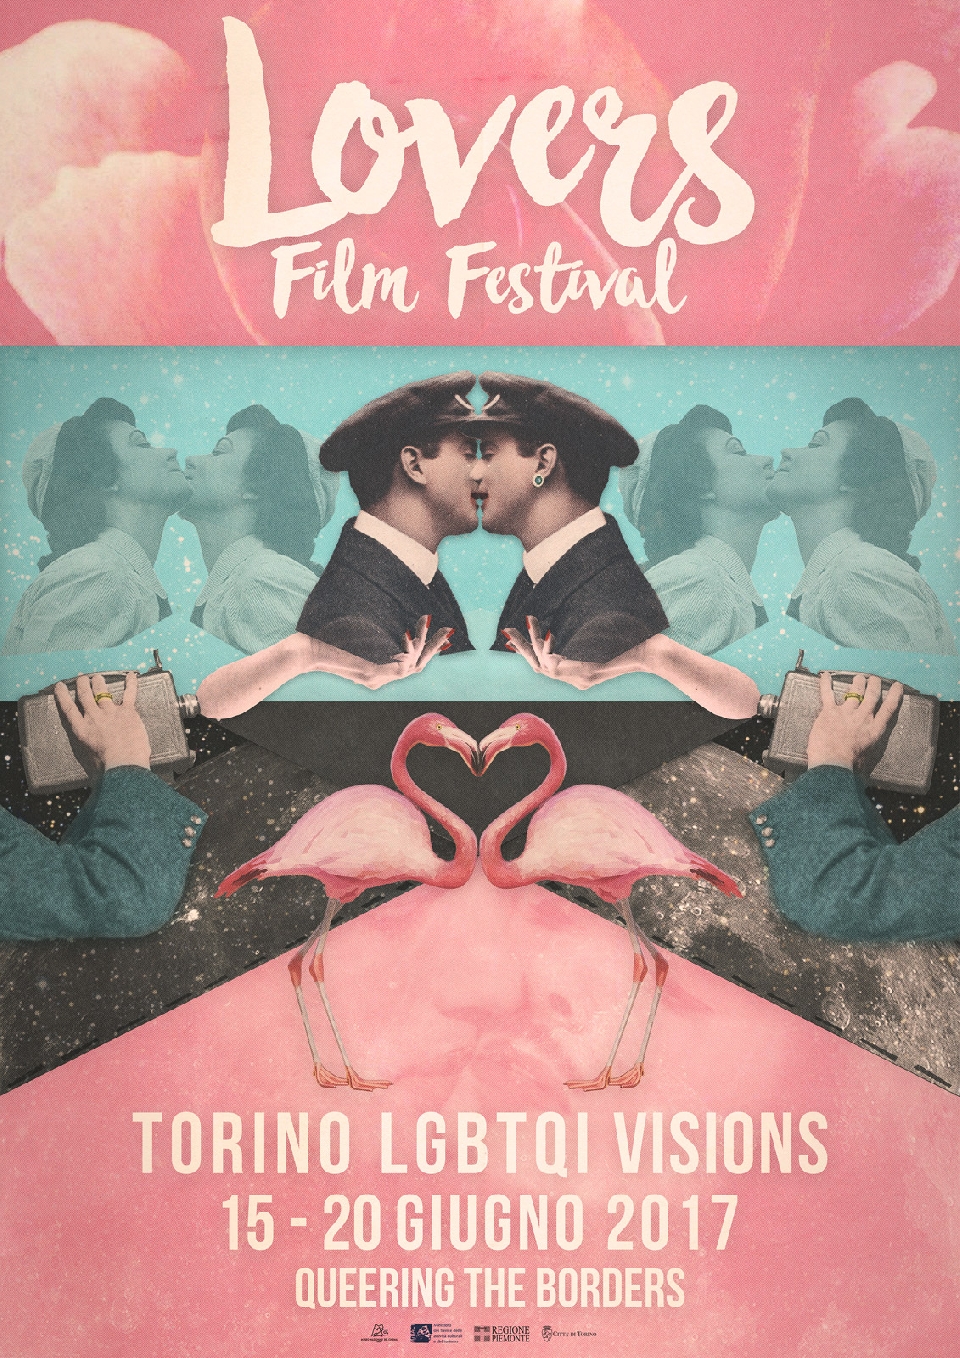 A Torino, da stasera, il Lovers Film Festival – Torino LGBTQI Visions